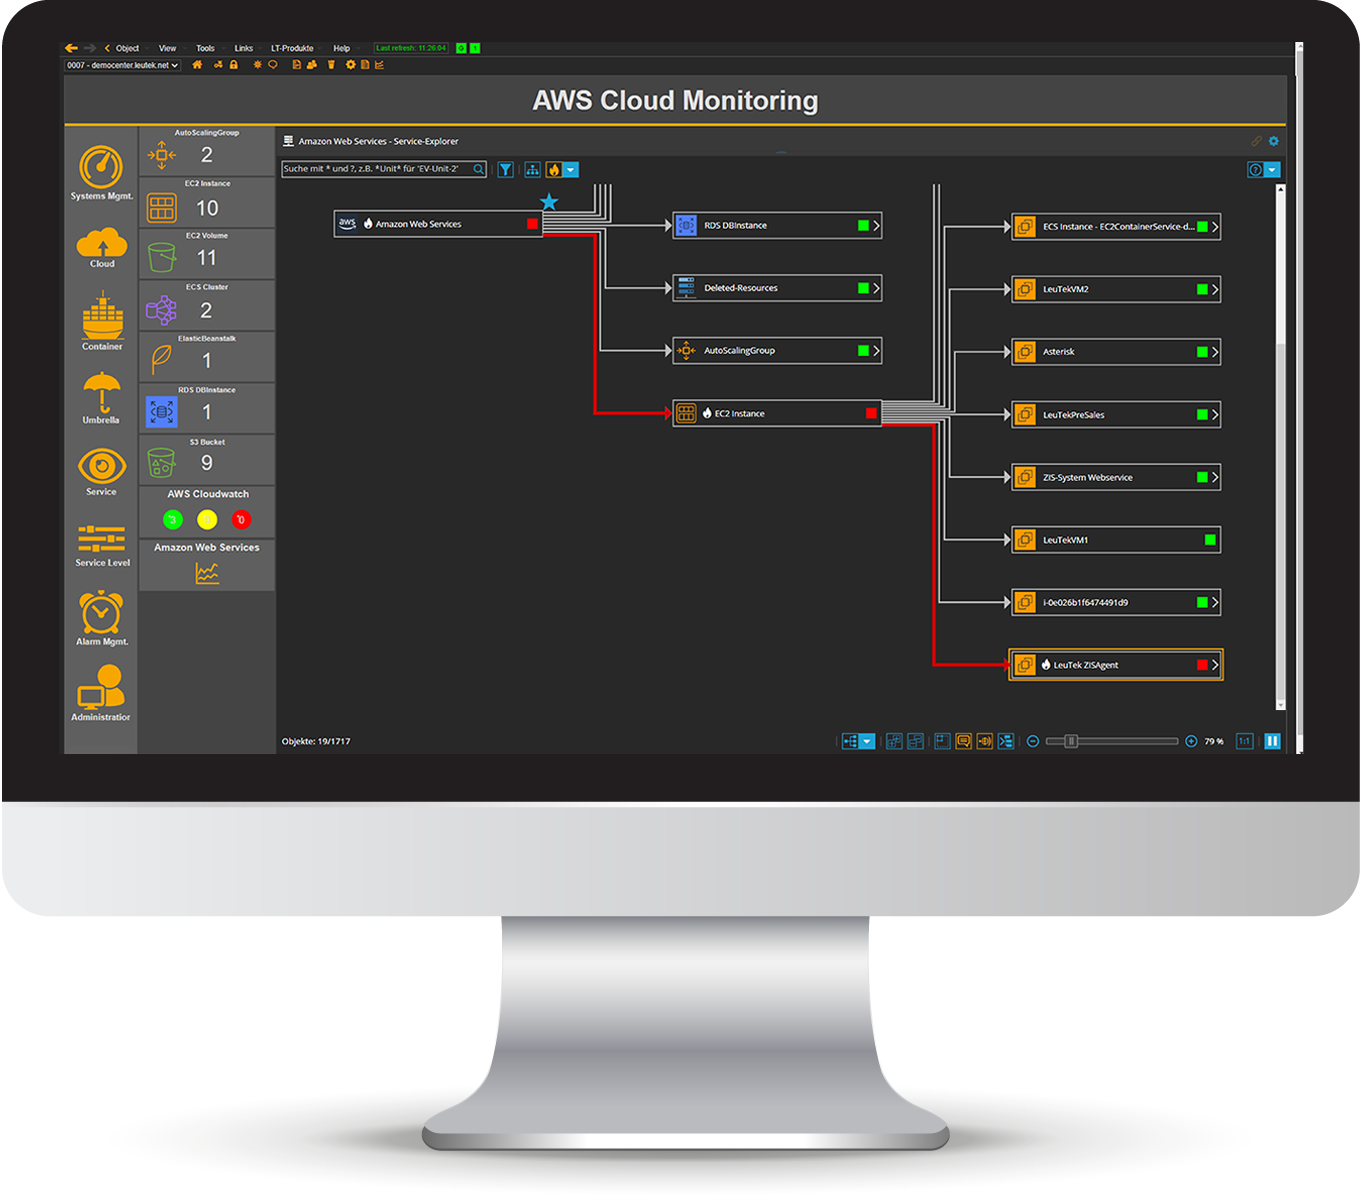 Cloud monitoring root cause analysis dashboard